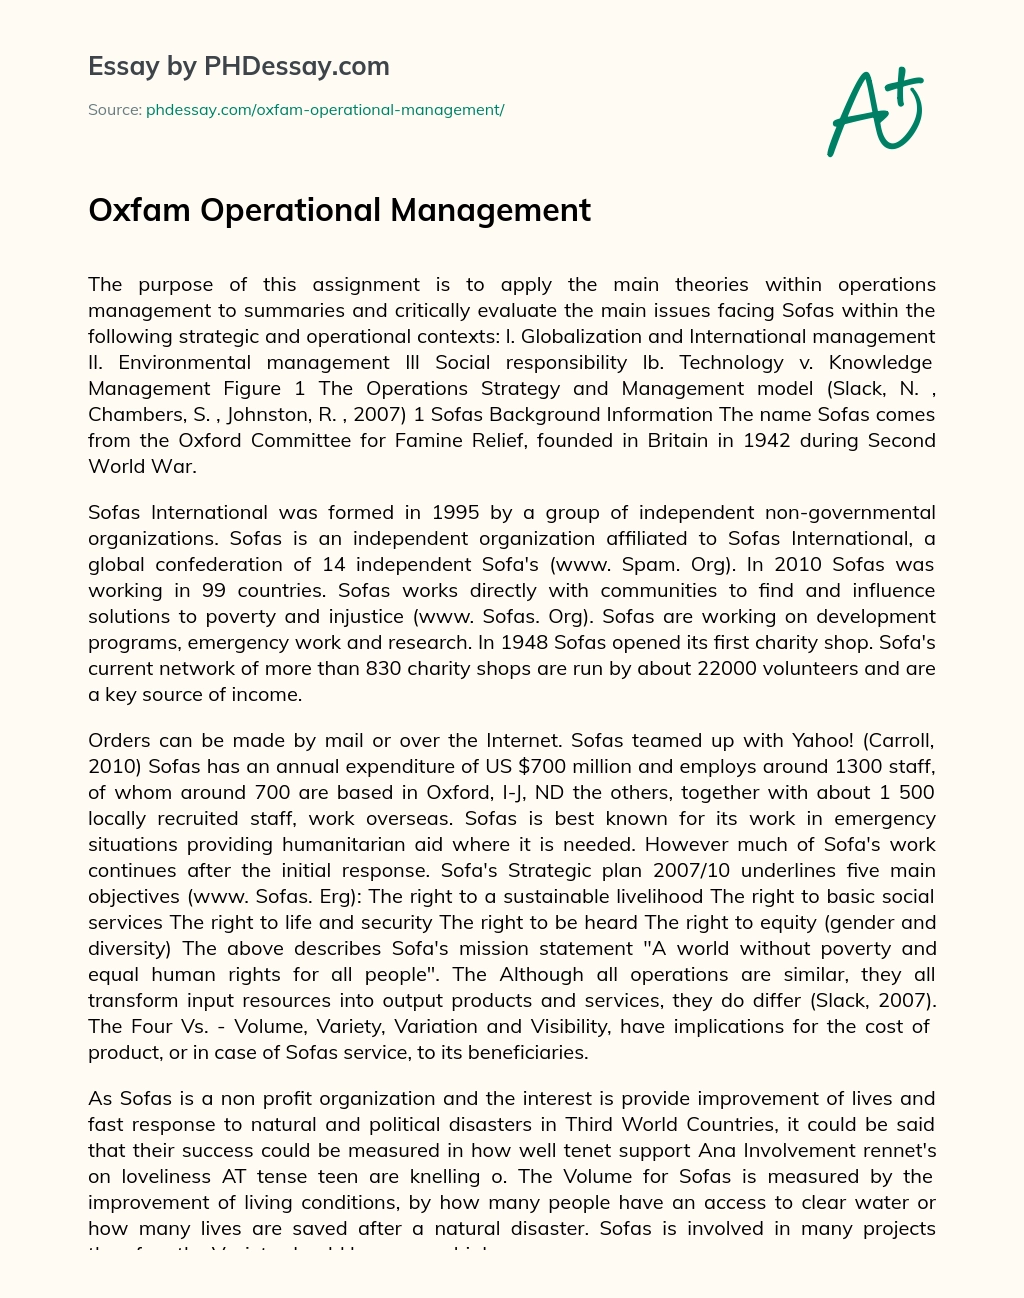 Oxfam Operational Management essay